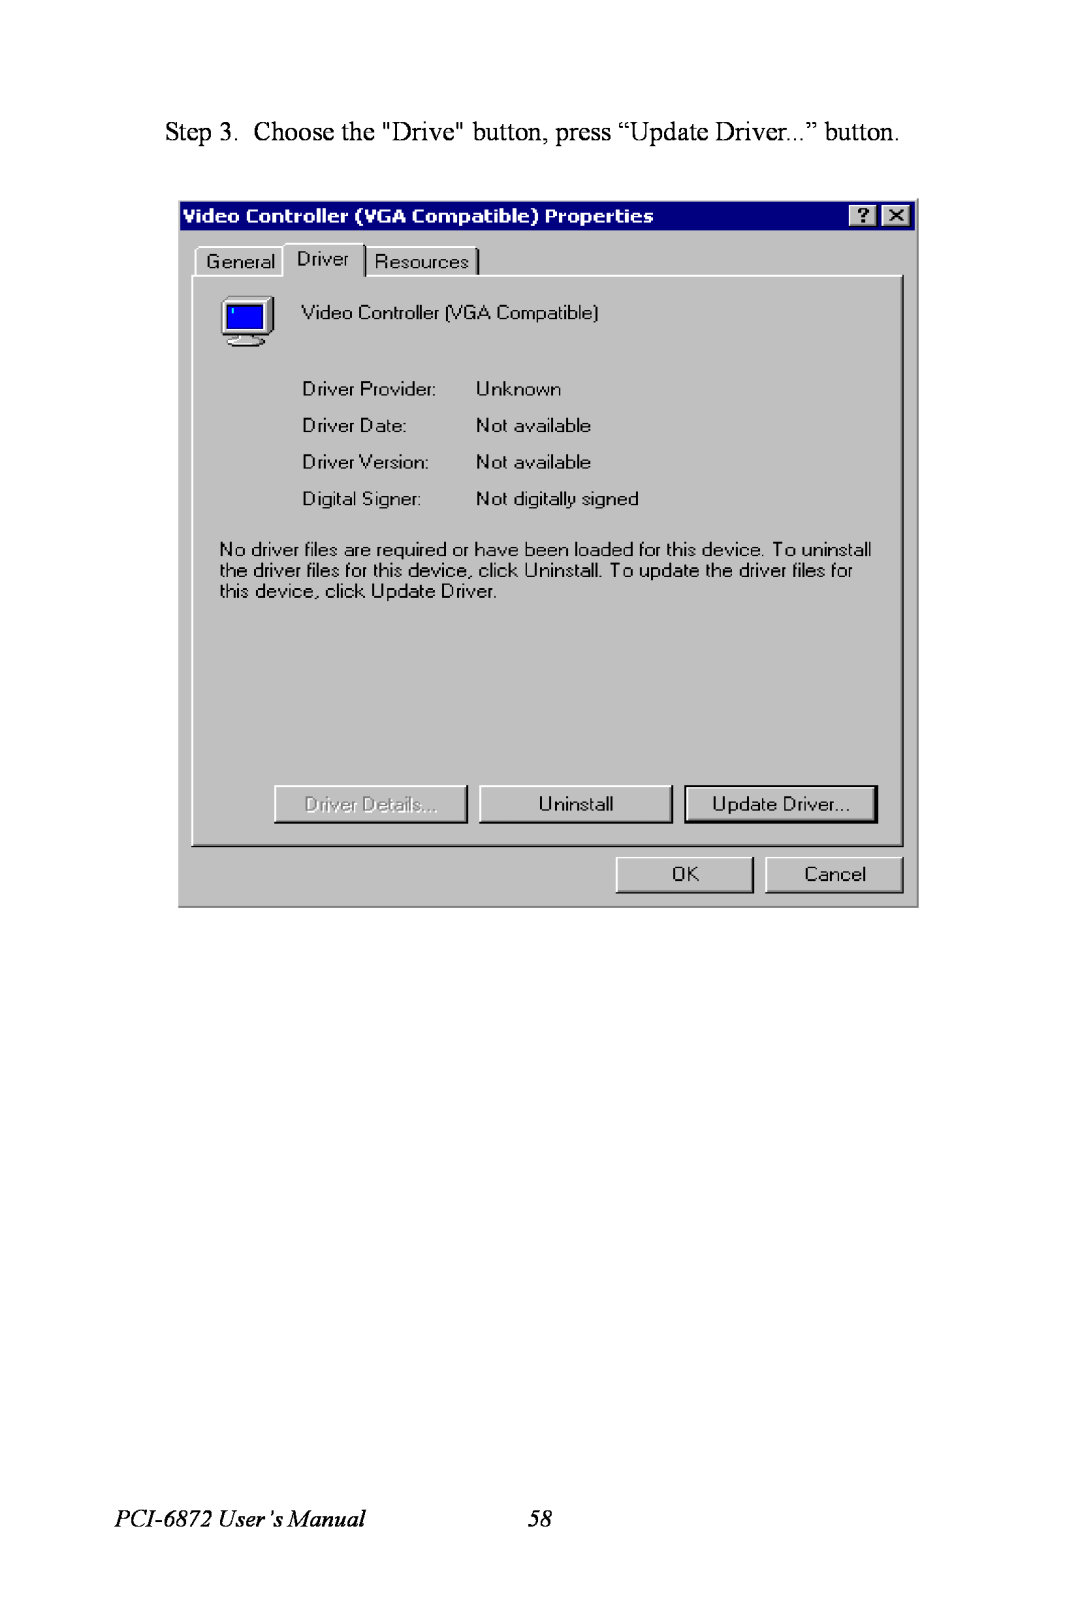 Advantech user manual Choose the Drive button, press “Update Driver...” button, PCI-6872 User’s Manual 